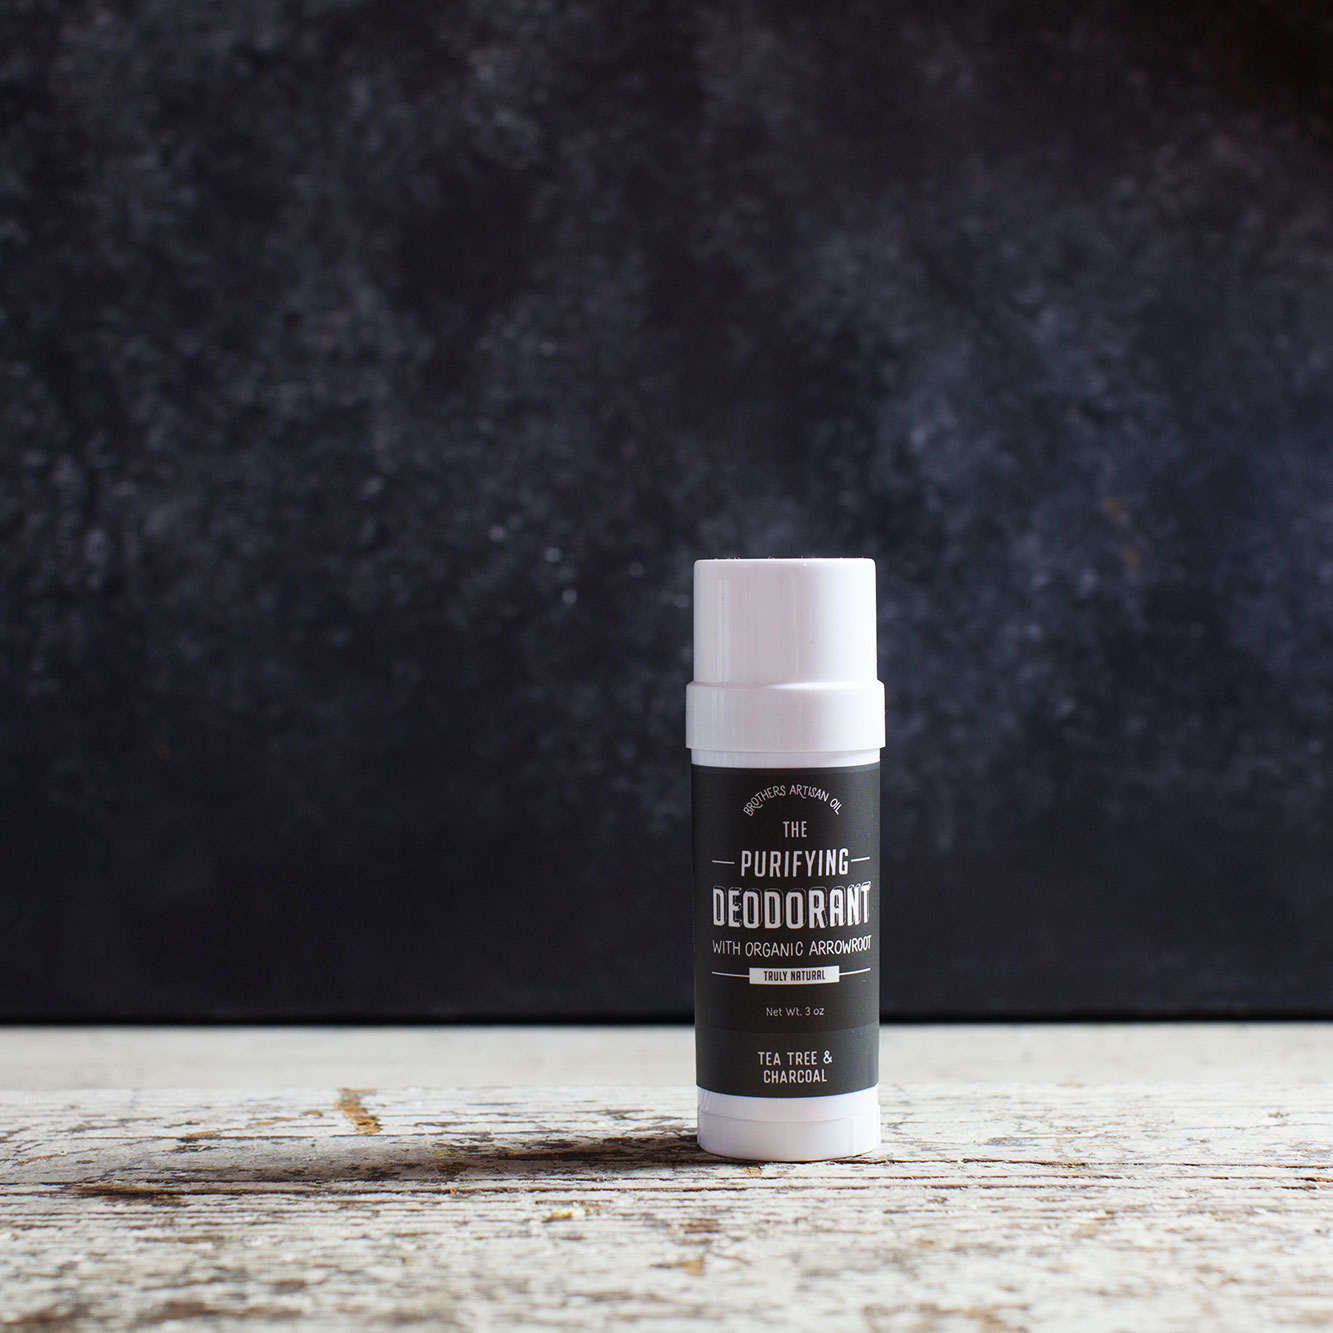 The Purifying Deodorant: Tea Tree & Charcoal